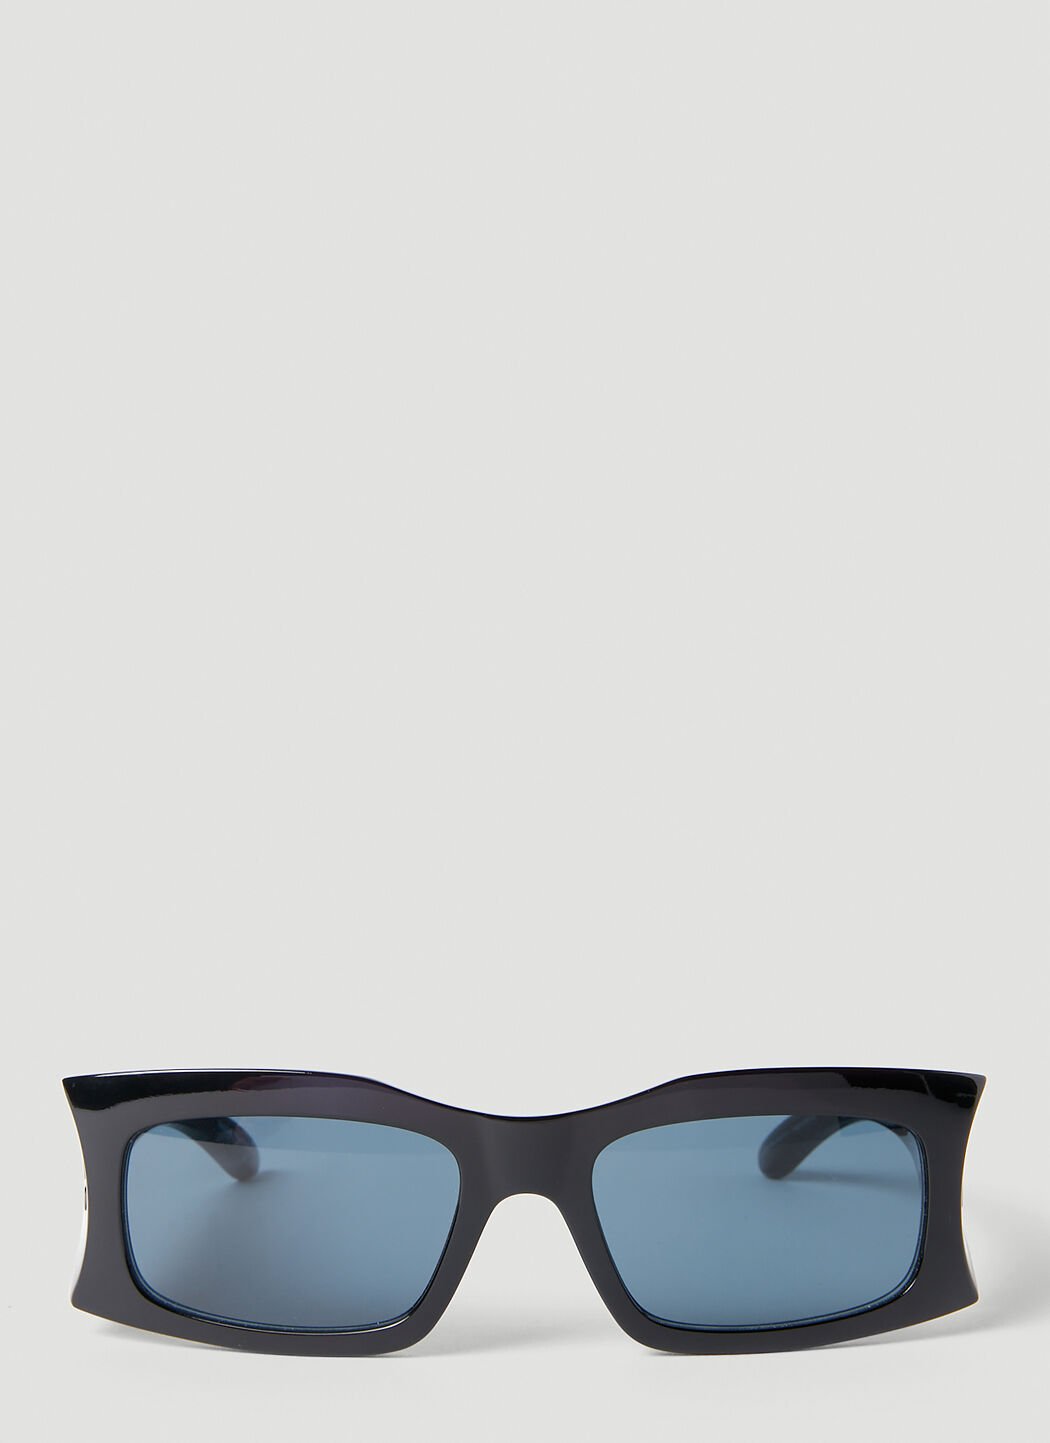 Balenciaga Hourglass Rectangle Sunglasses Black bcs0253001